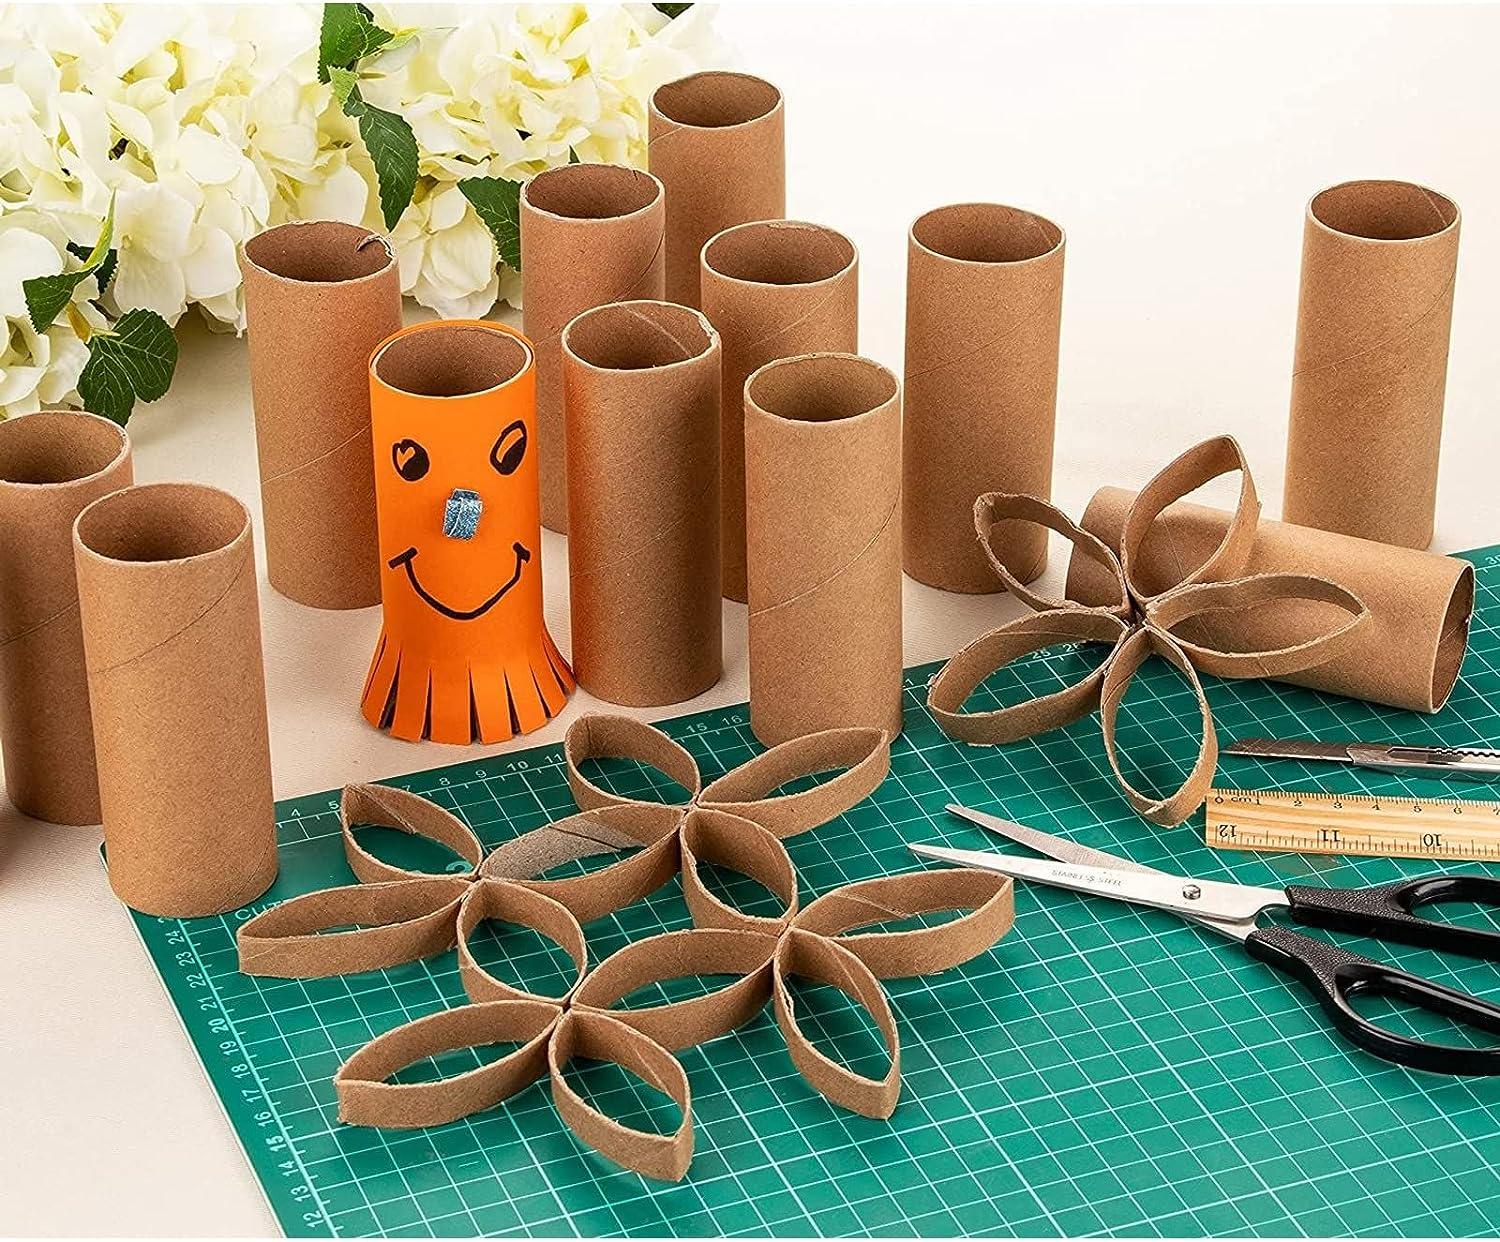 Cardboard Tubes, Craft Rolls 24/pack